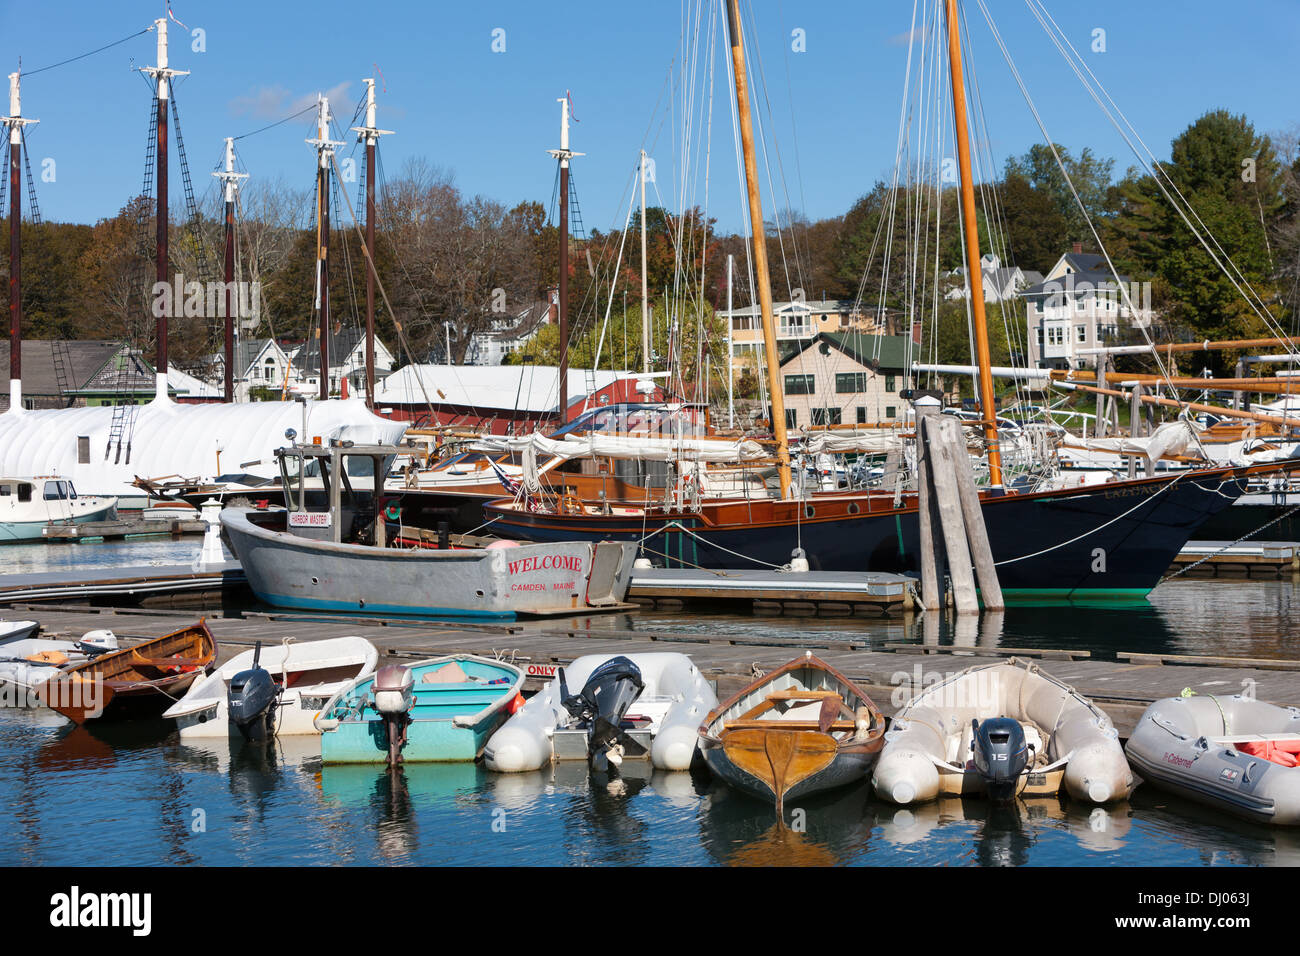 Dinghies line a dock in front of schooners and windjammers anchored in Camden harbor in Camden, Maine. Stock Photo